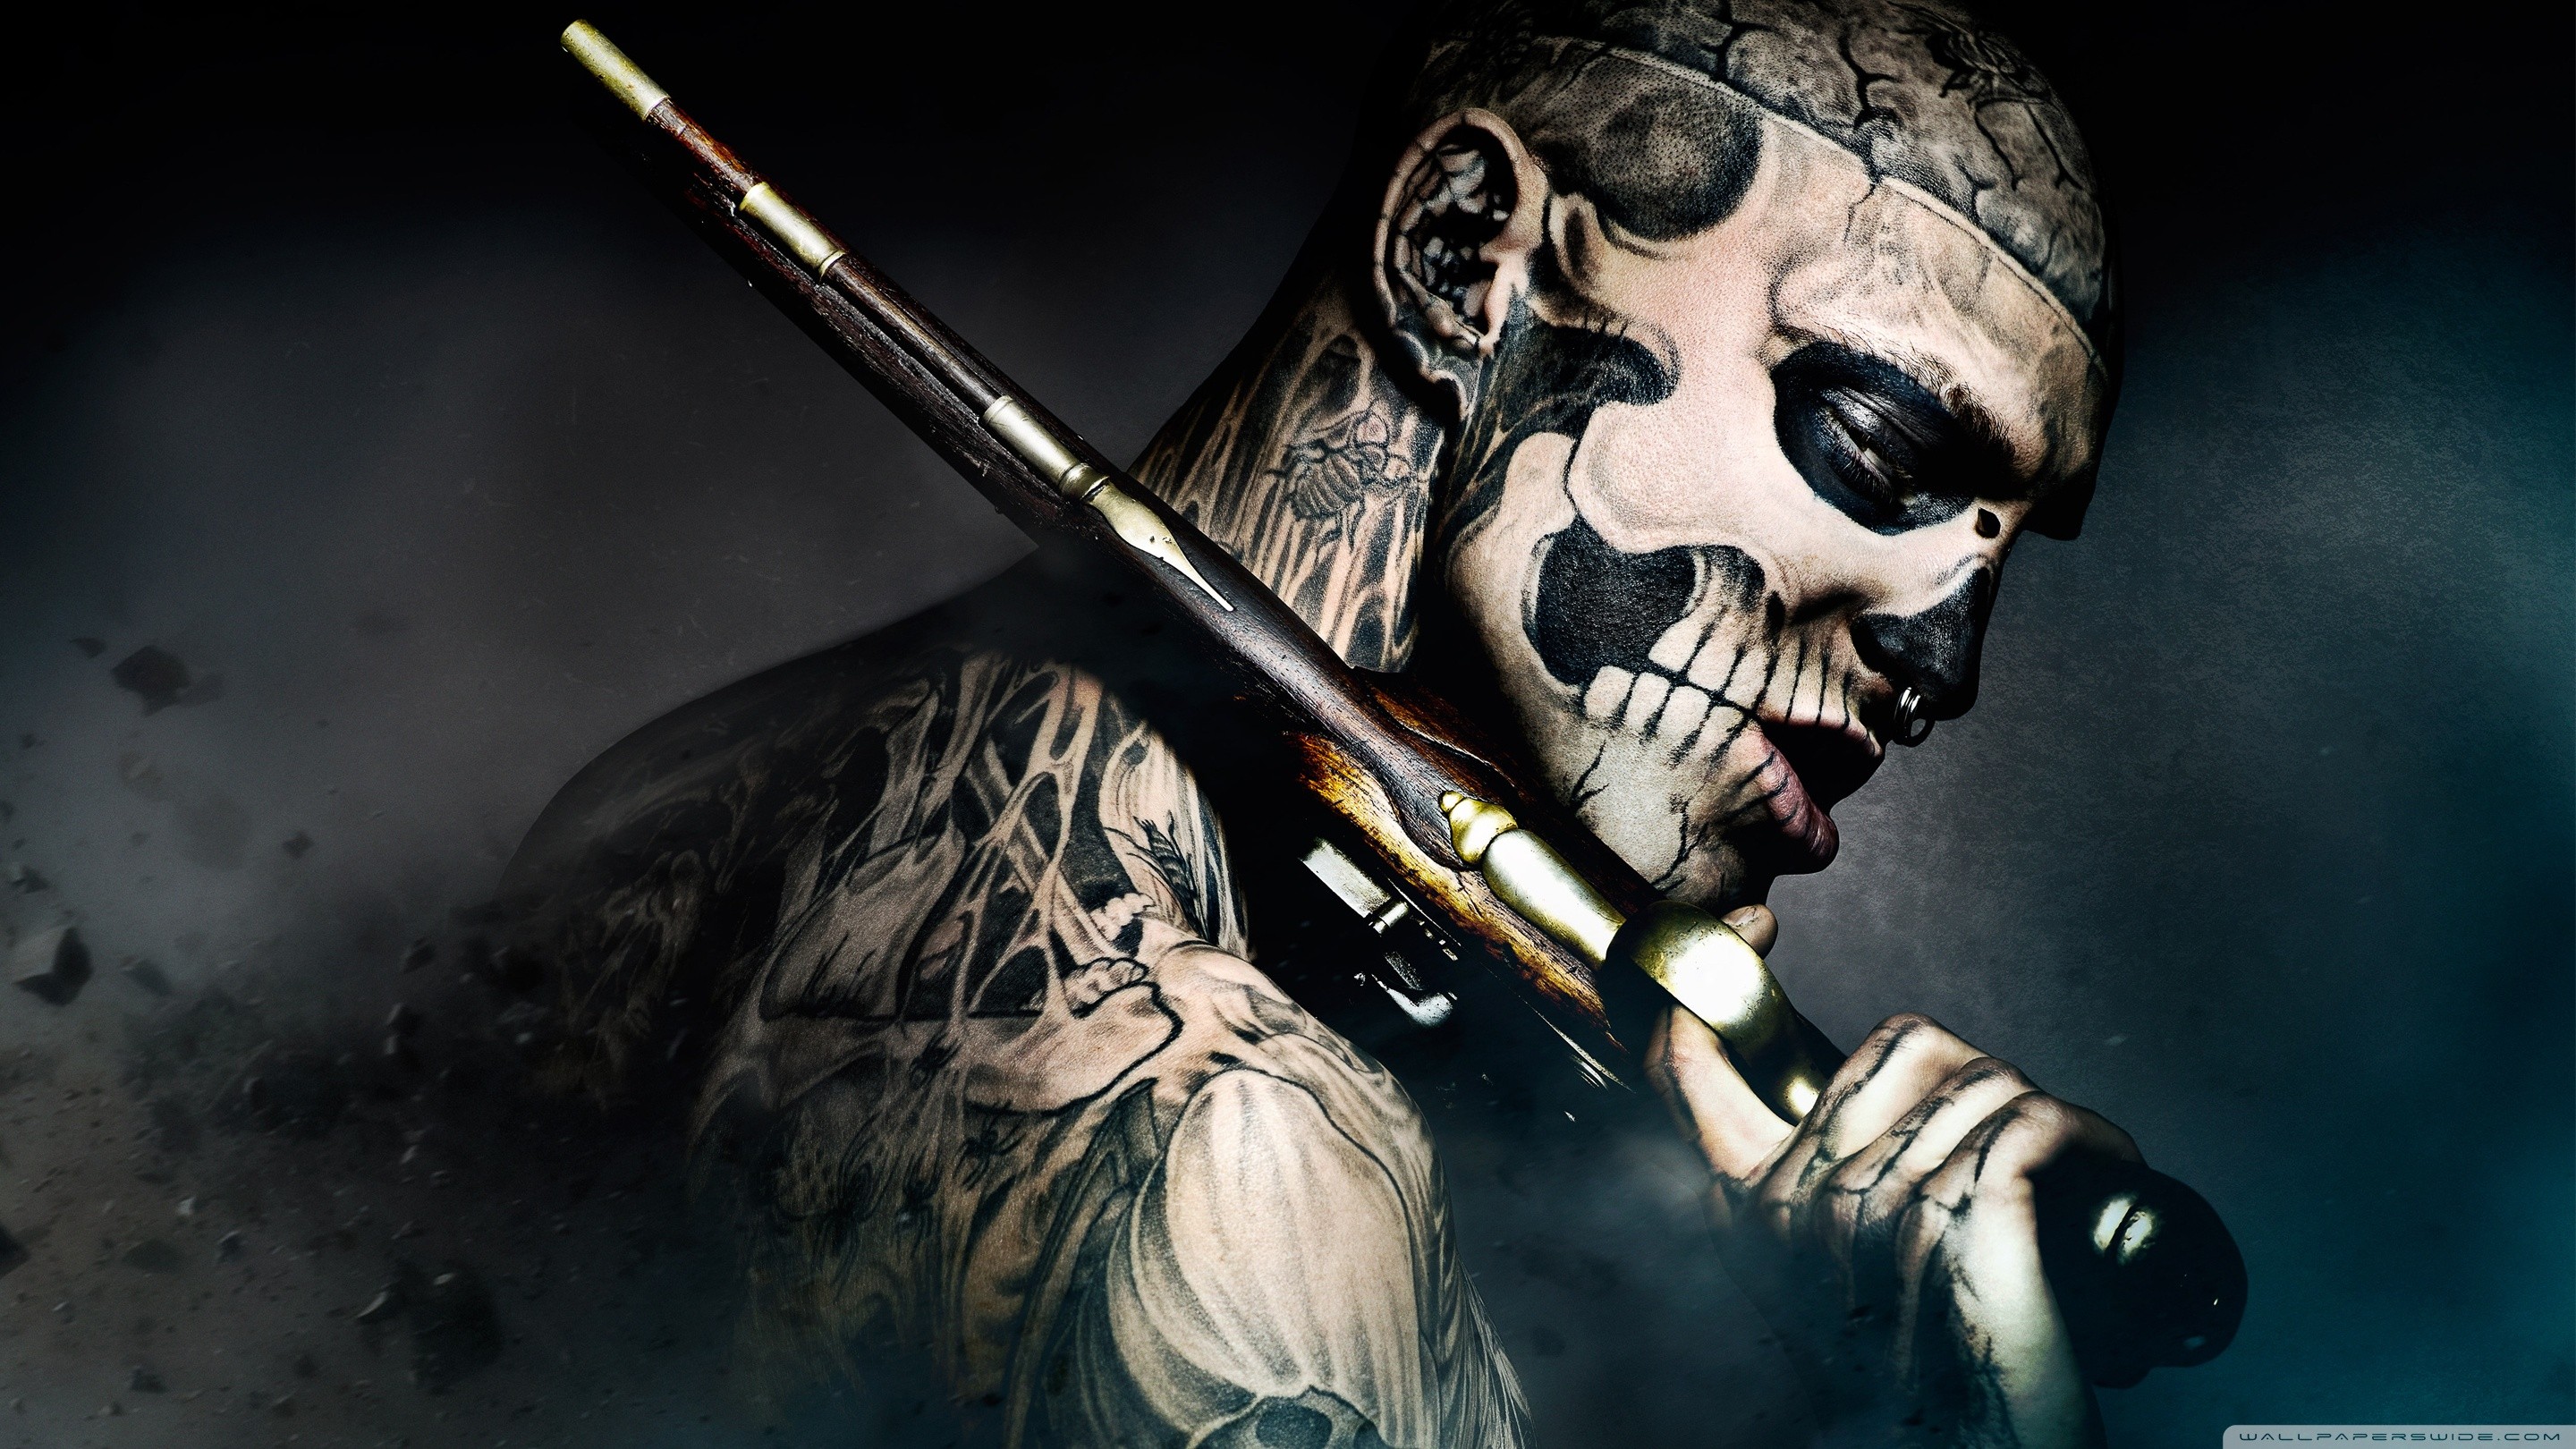 General 2880x1620 47 Ronin Rick Genest tattoo face paint actor movies gun weapon inked men watermarked closeup